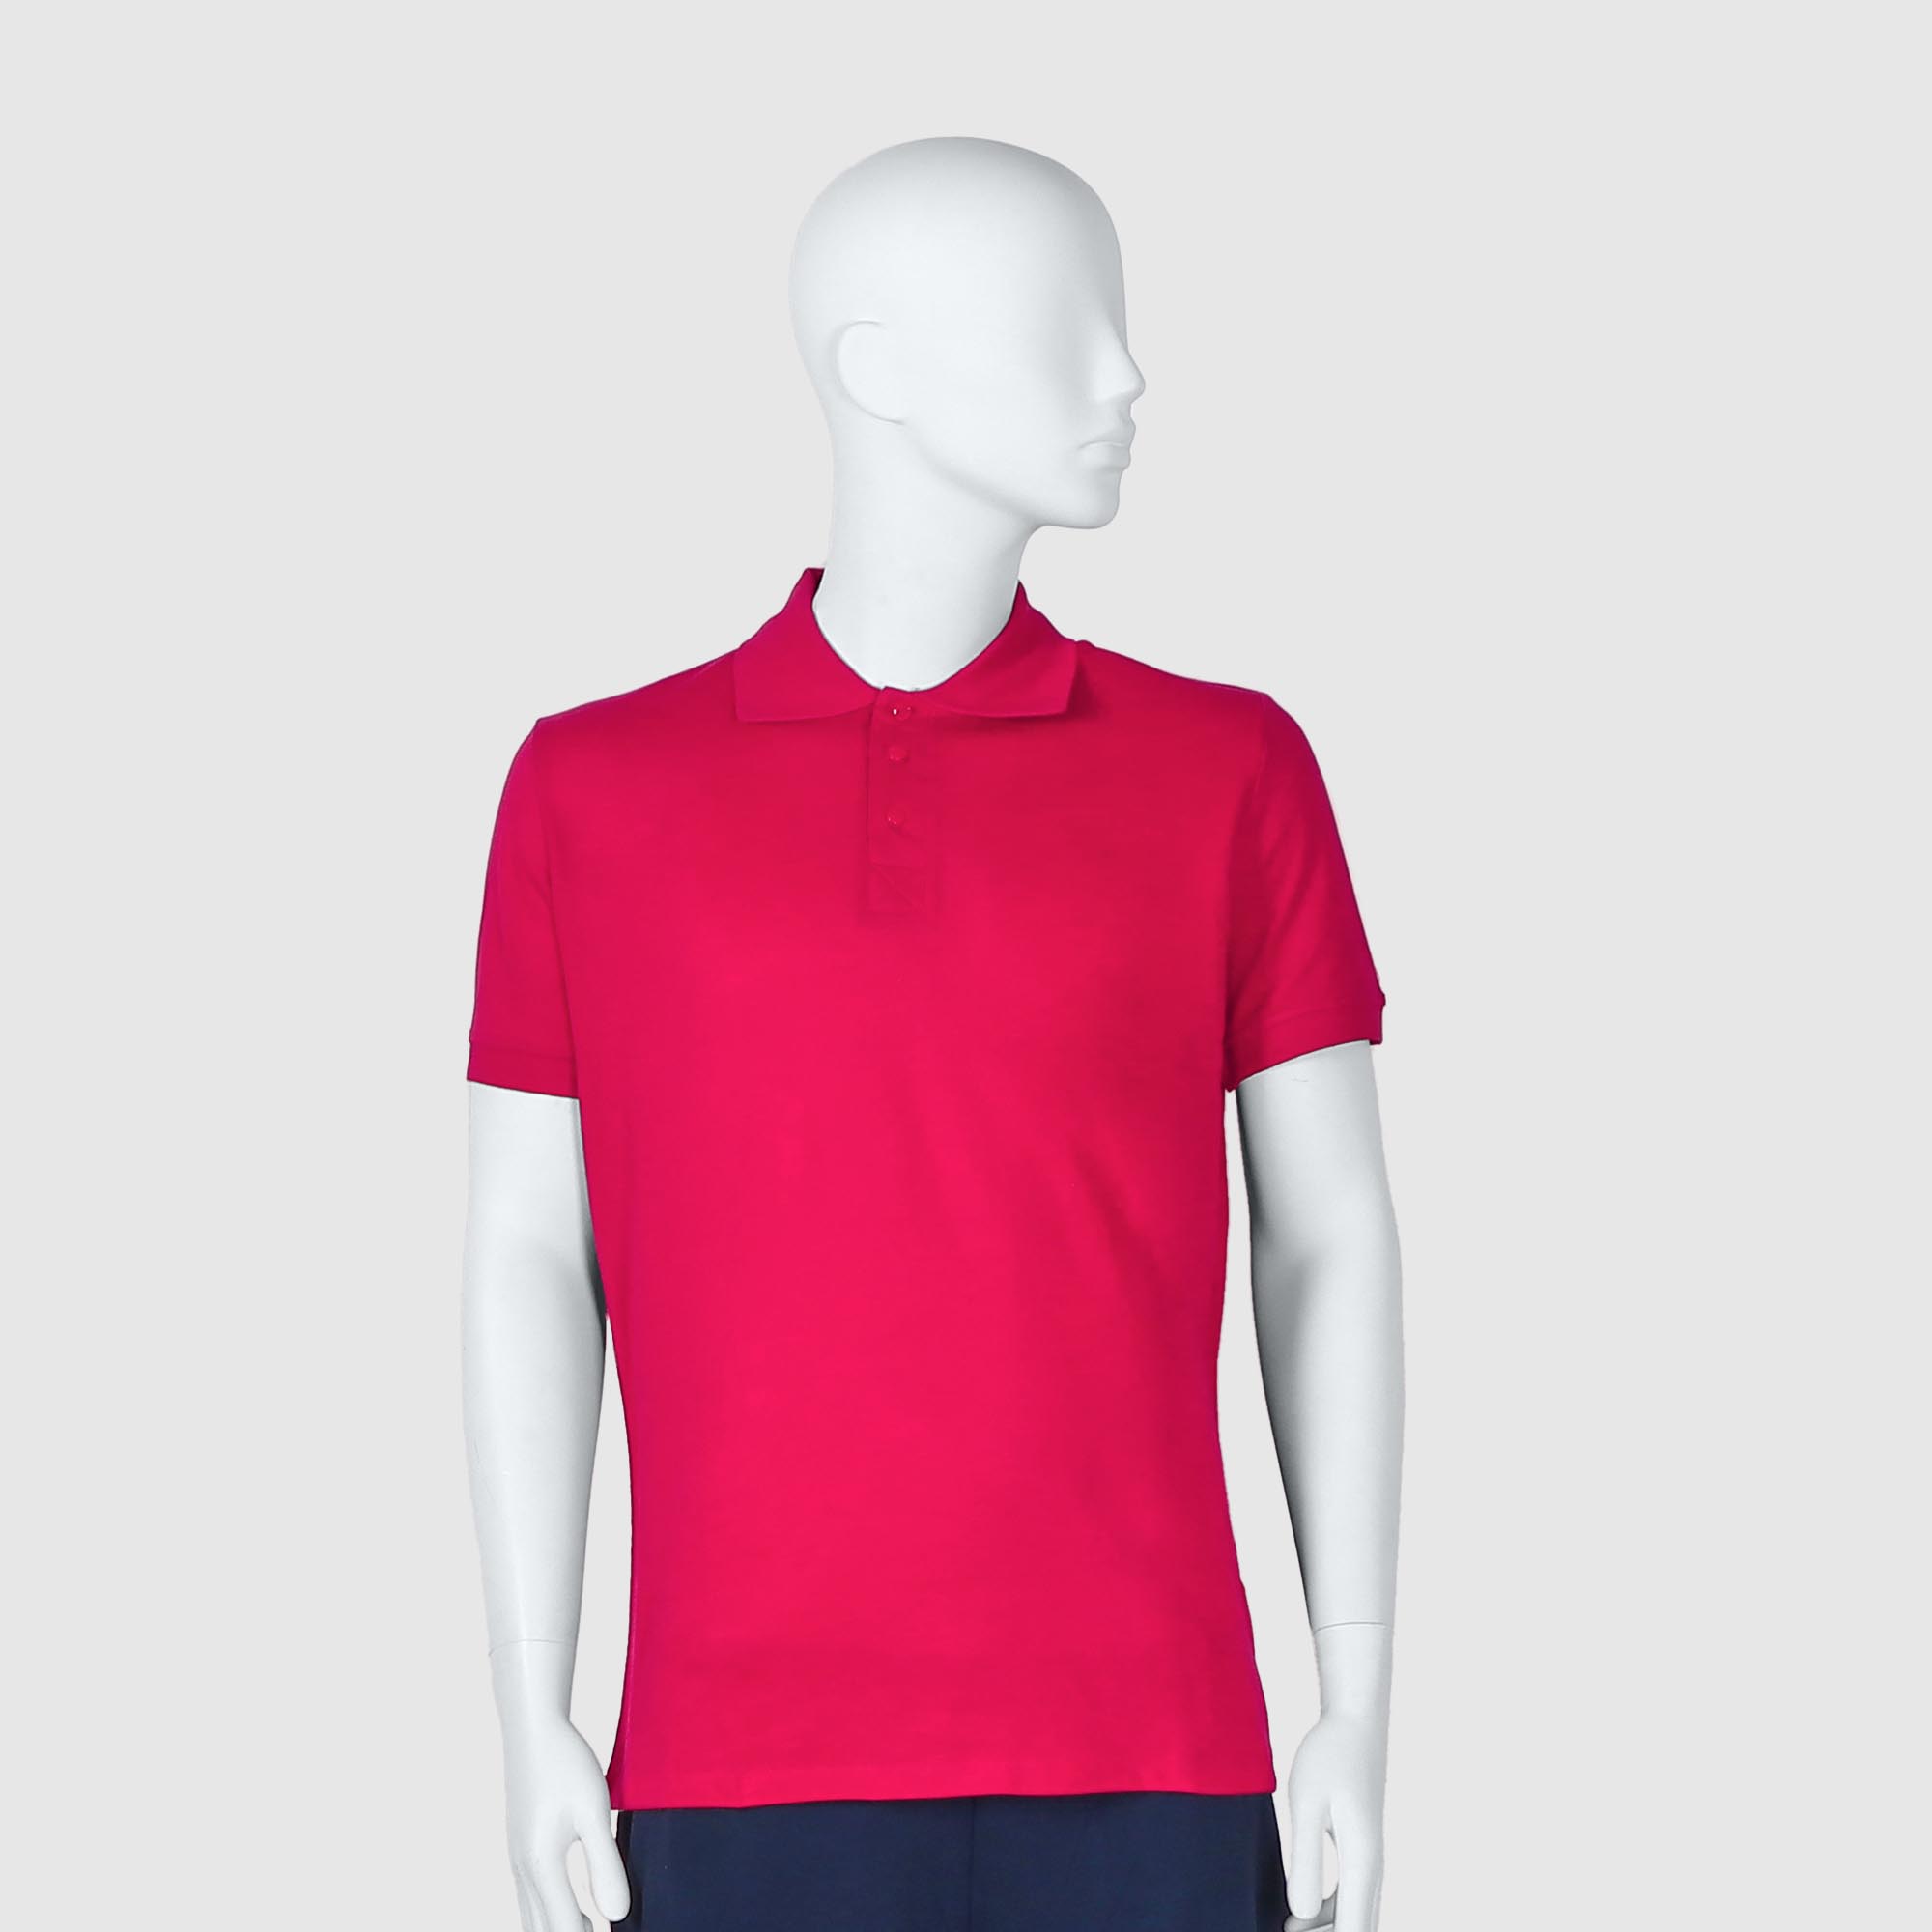 Мужская футболка-поло Diva Teks красная (DTD-08), цвет красный, размер 52-54